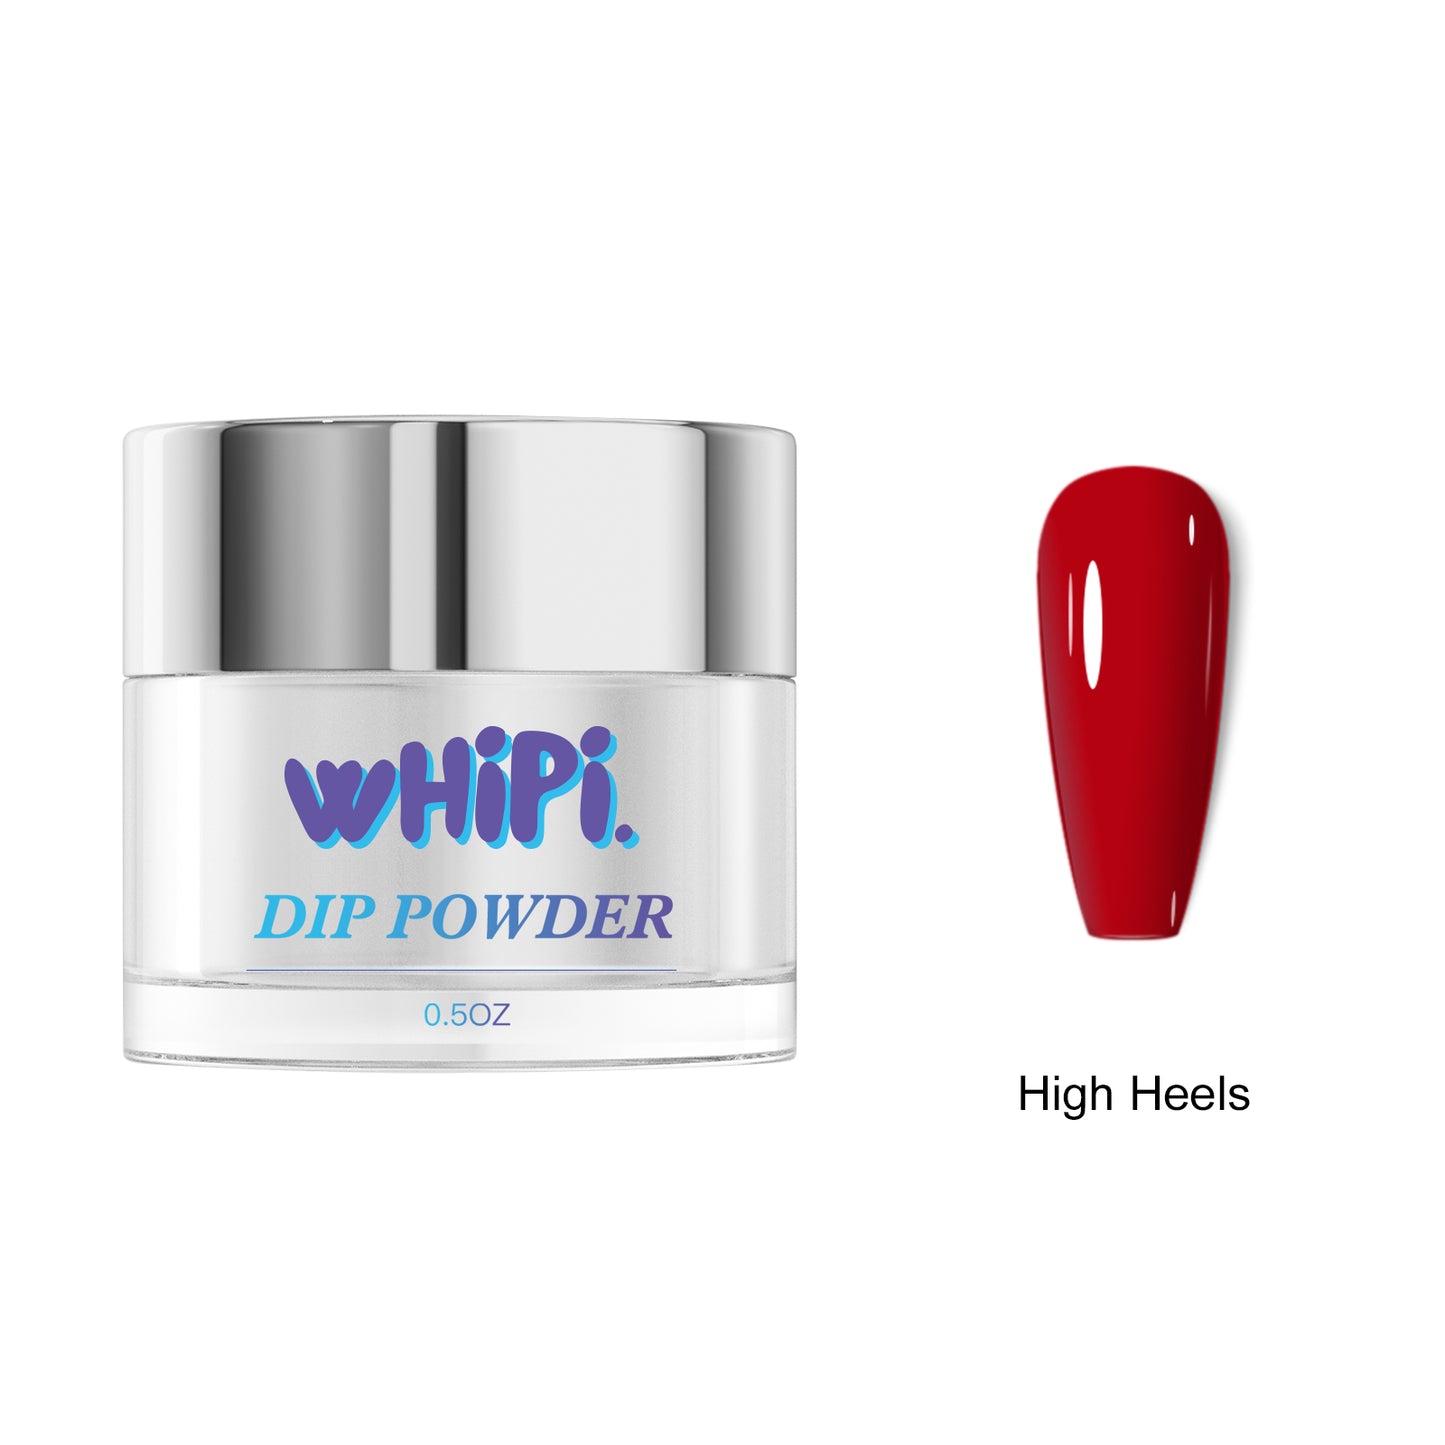 High Heels Dip Powder